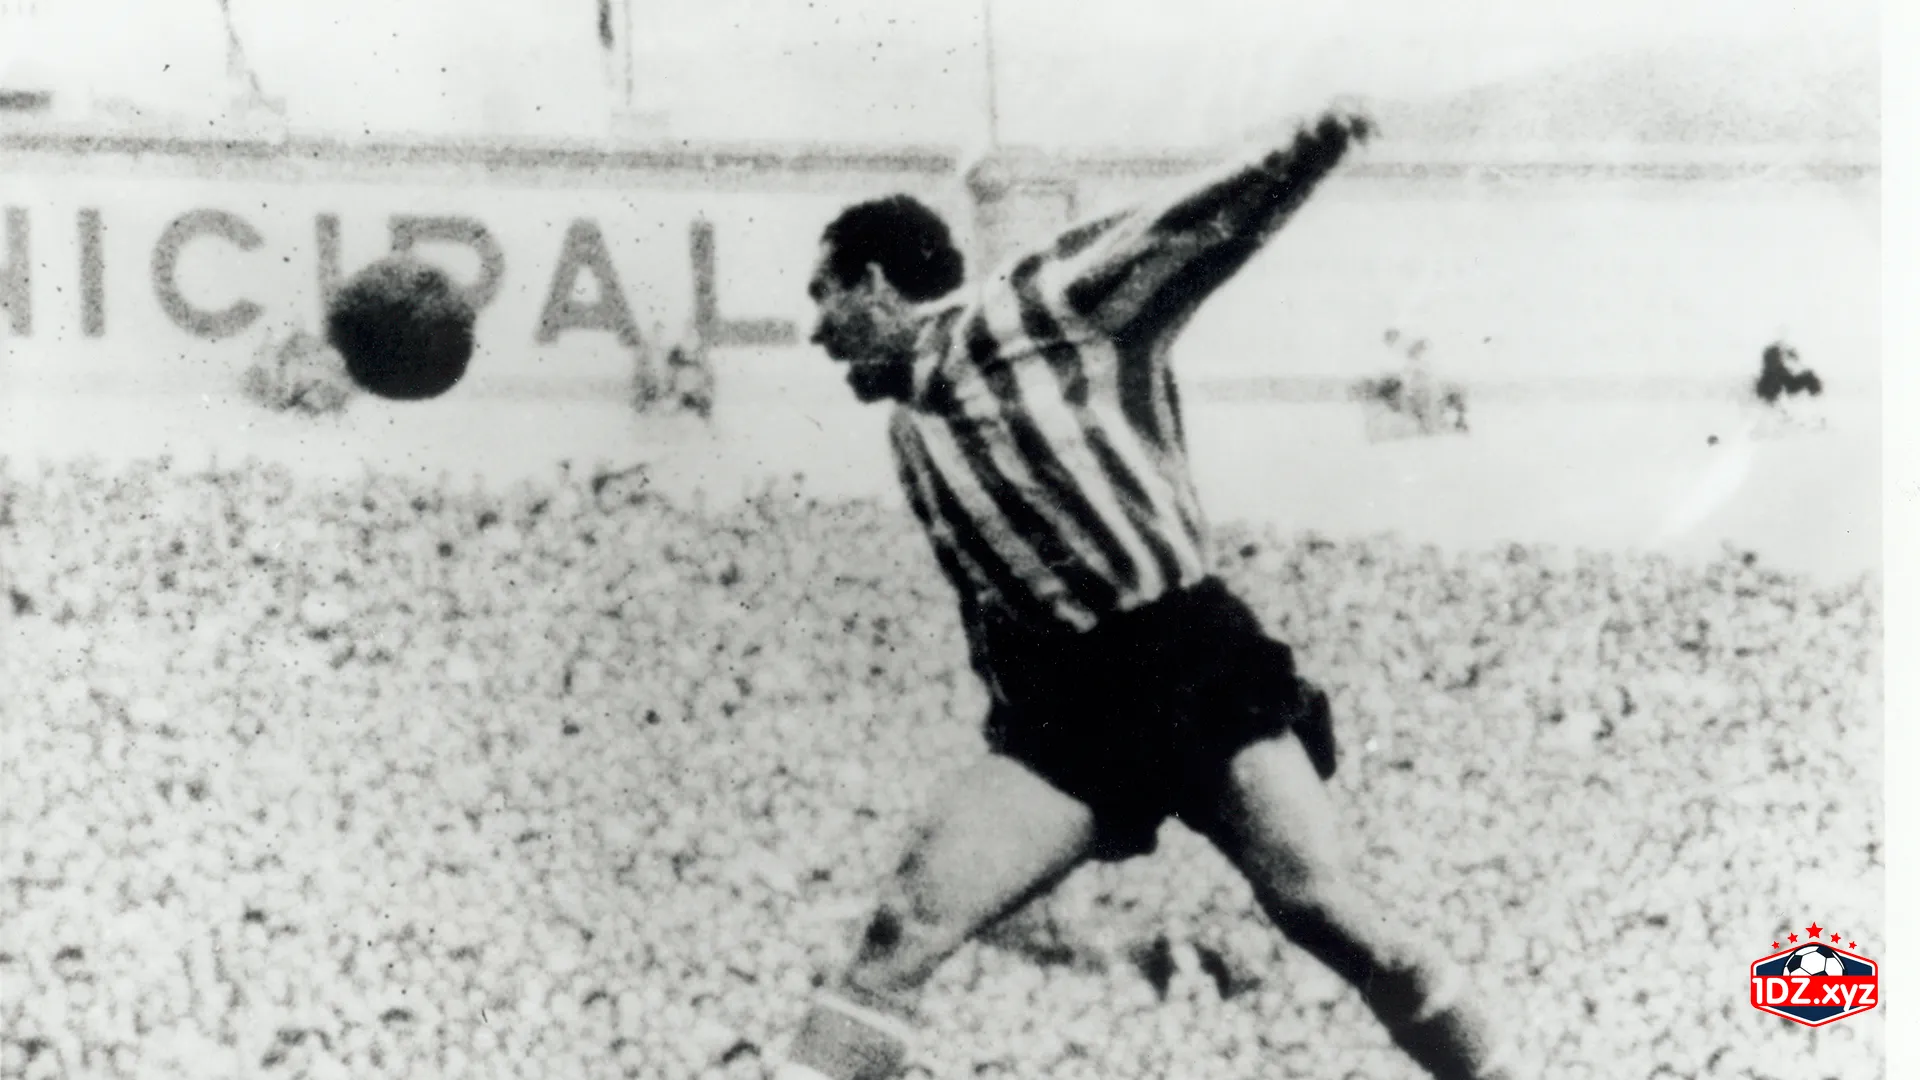 Telmo Zarra: Cầu thủ ghi bàn nhiều nhất – 251 bàn